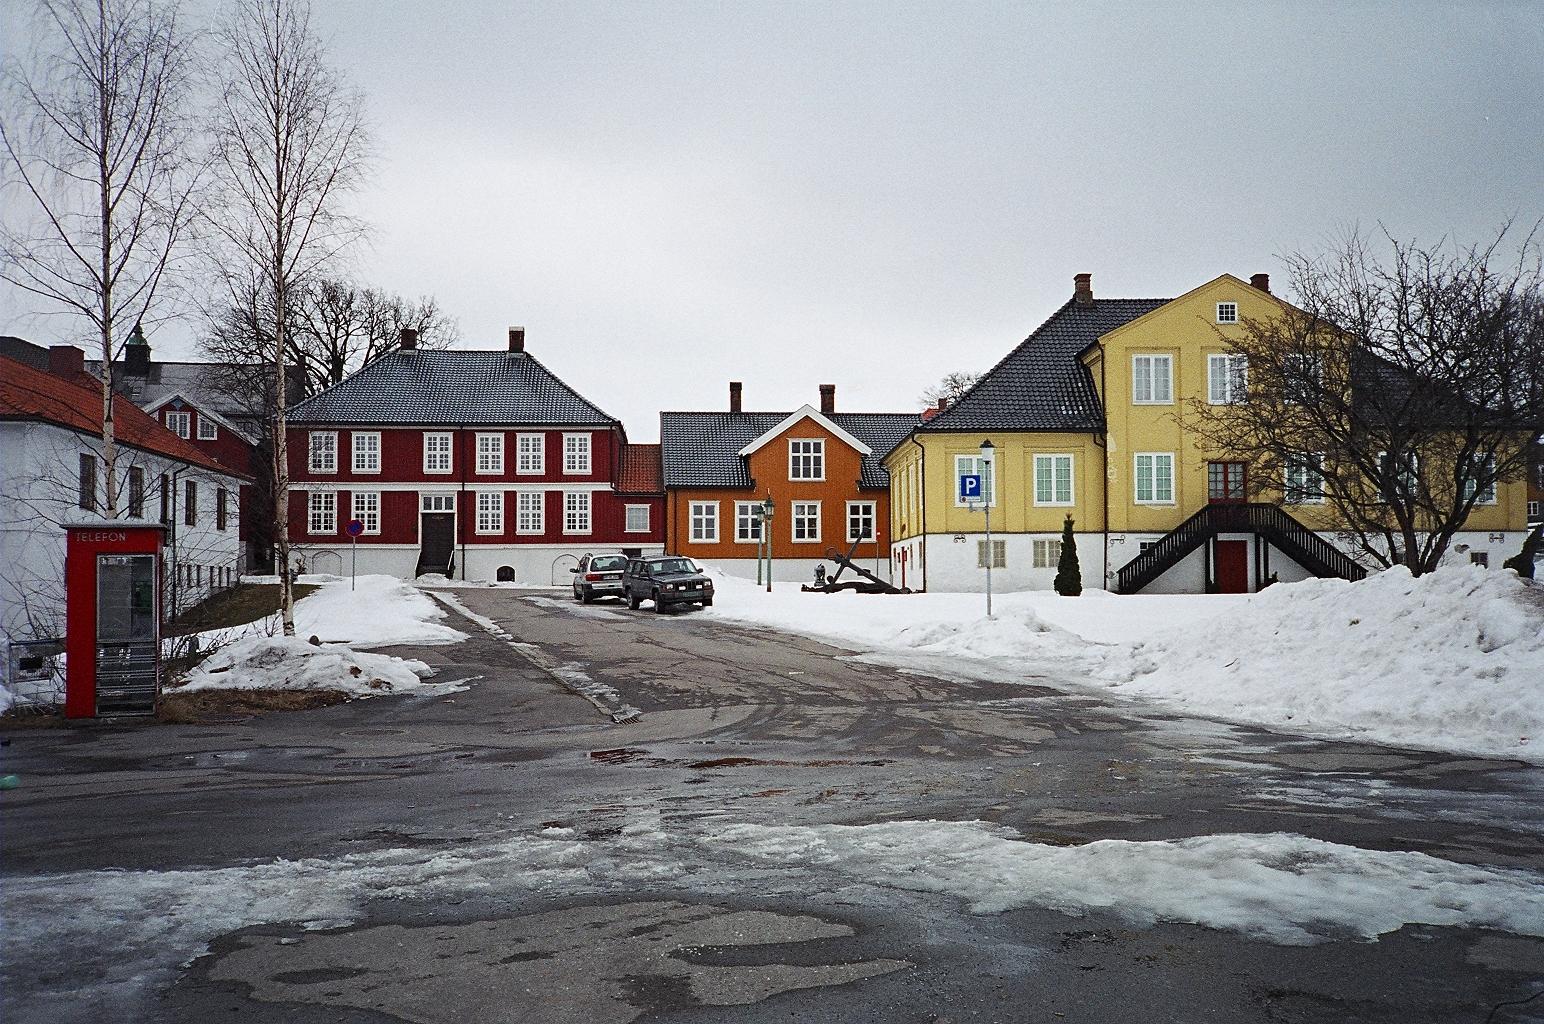 Houses in the Larvik’s former main street - Storgata 